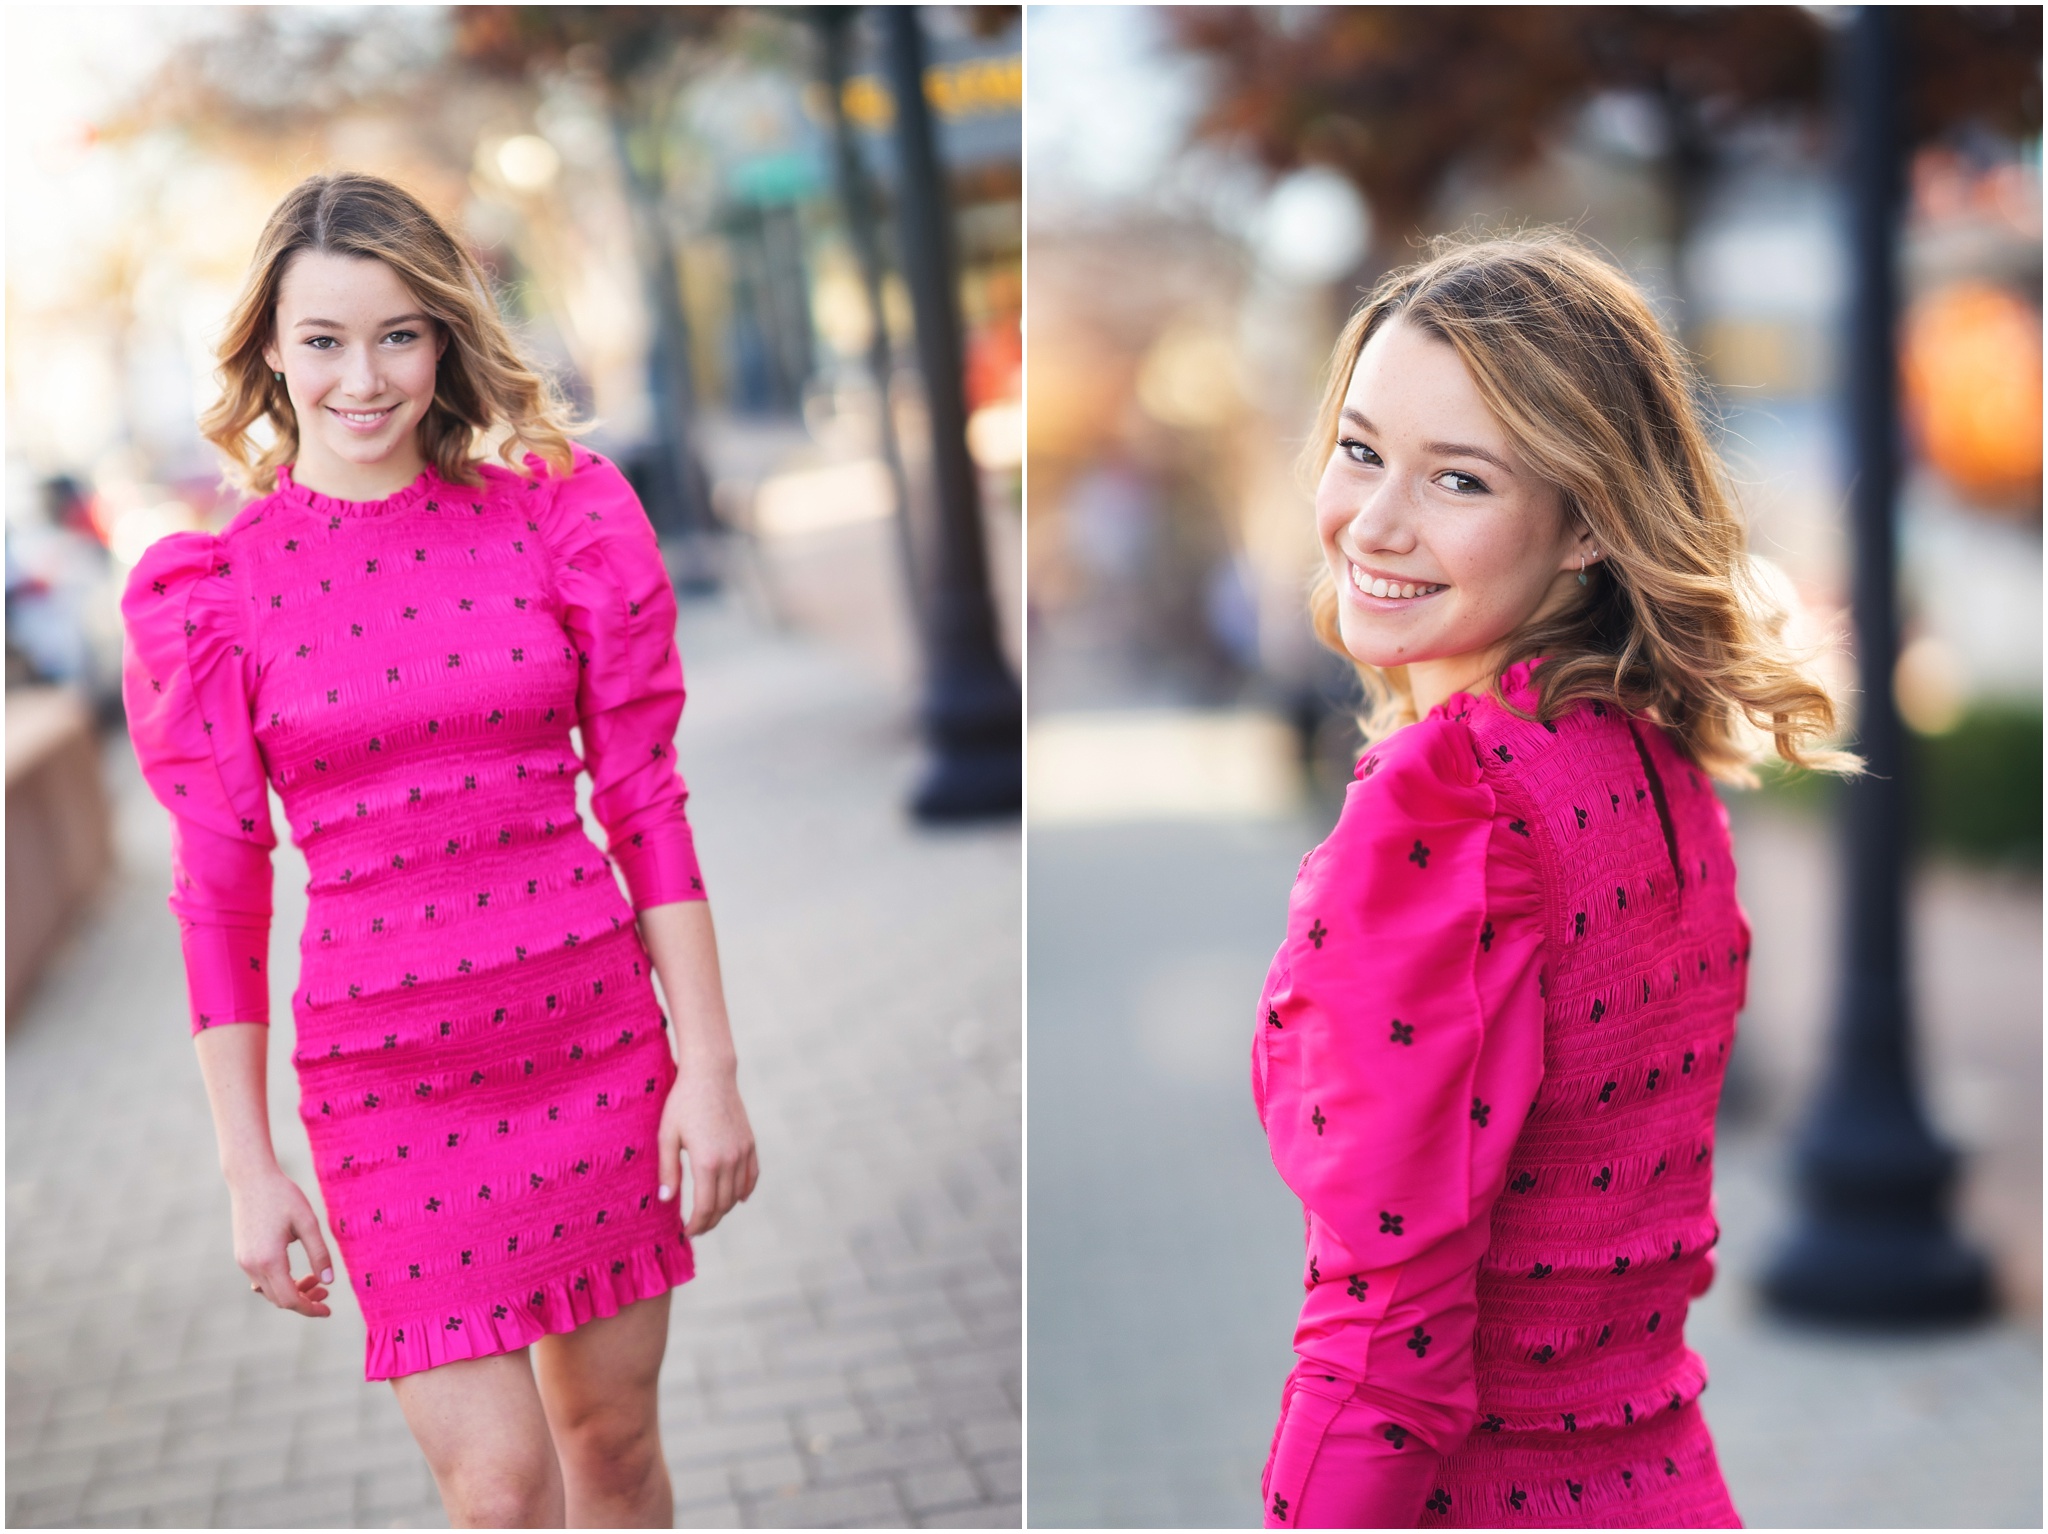 Ava Noble in pink 80s dress walking down street